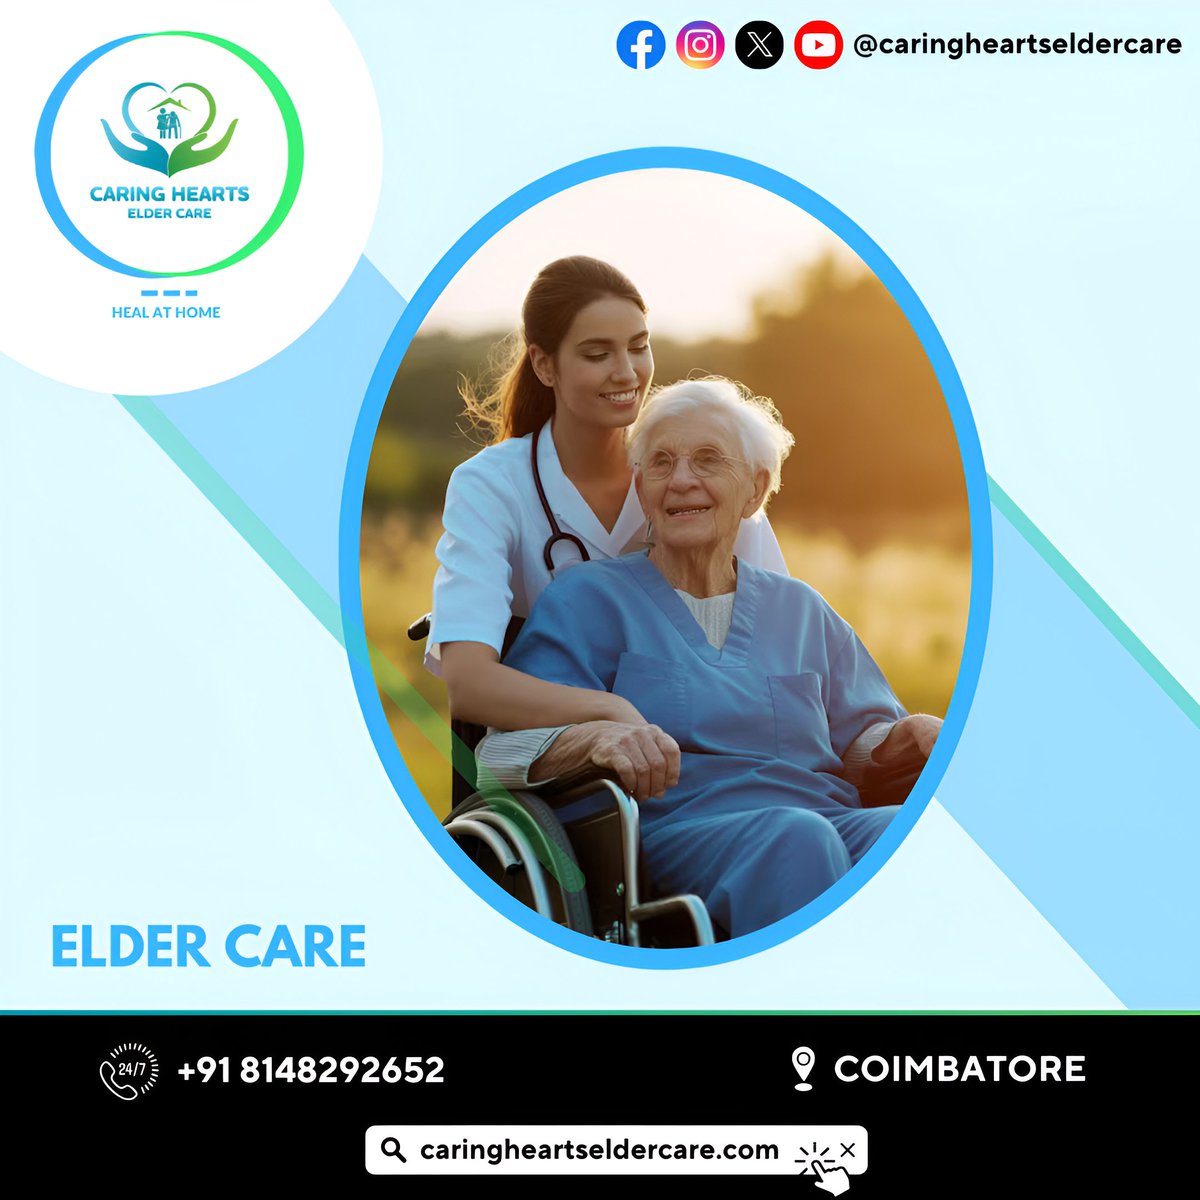 Why Choose @caringheartsEC 

#caringheartseldercare #homecare #eldercare #Chennai #Coimbatore #Thursday #Hyderabad #Mumbai #Kerala #bangalore #uk #usa #tweet #careathome #best #homecareagency #rspuram #Hospital #Assistedliving #services #wecare #love #Agency #India #news #care